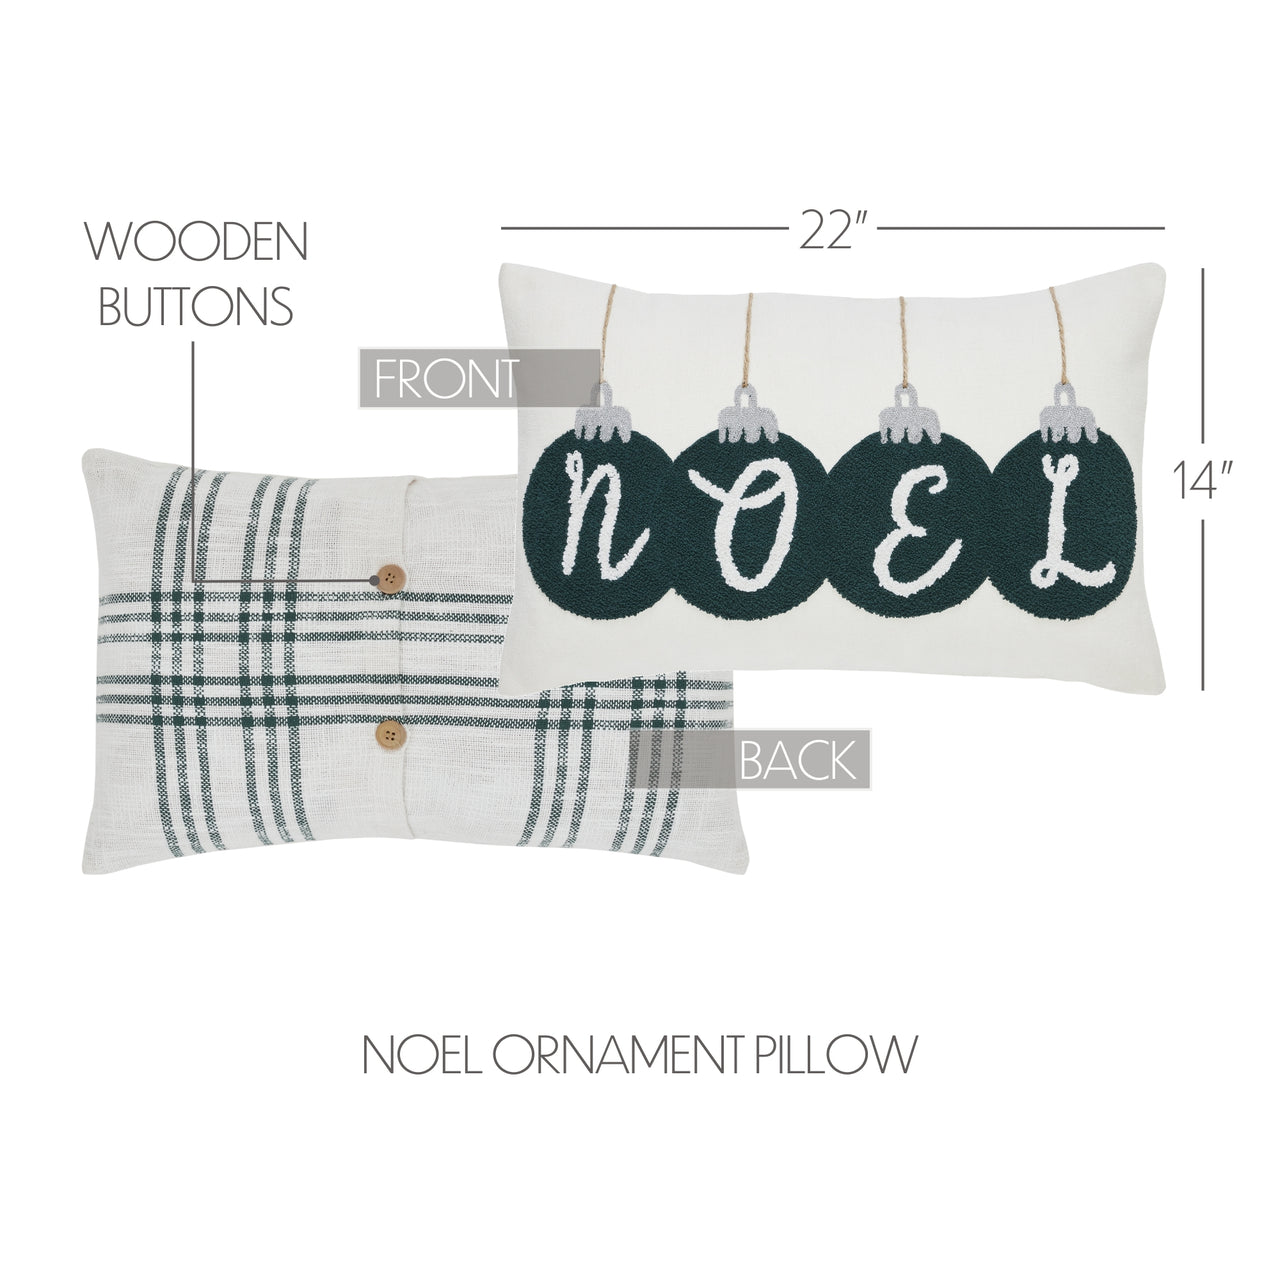 Pine Grove Plaid Noel Ornament Pillow 14x22 VHC Brands